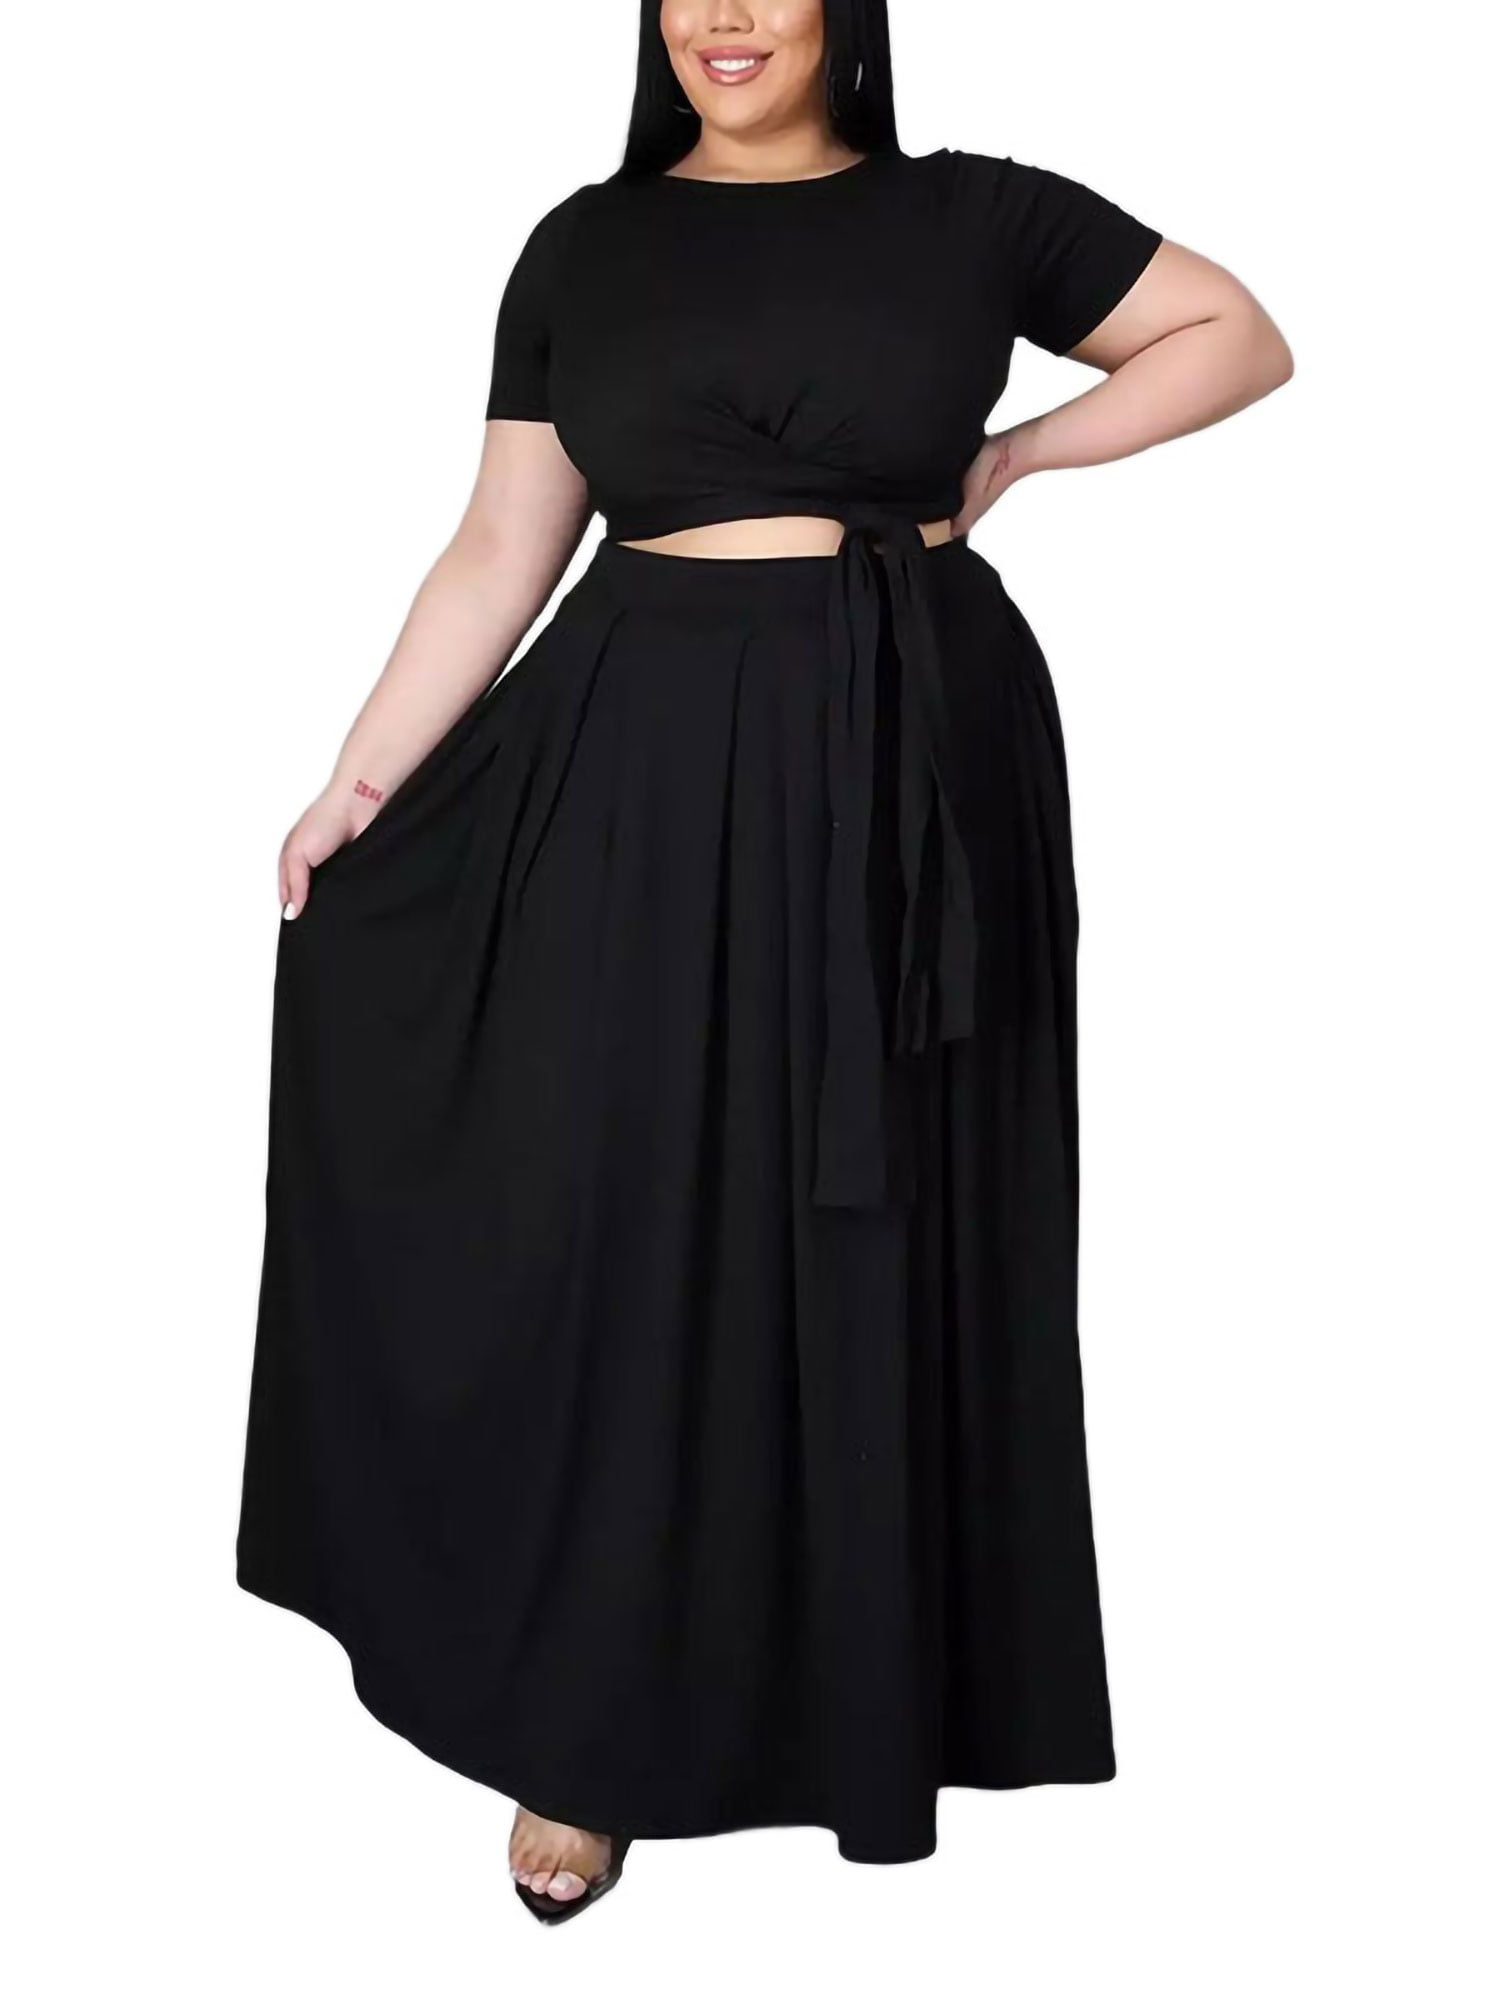 Long Skirt Outfits: How To Style Maxis & Midis This Season - Lulus.com  Fashion Blog